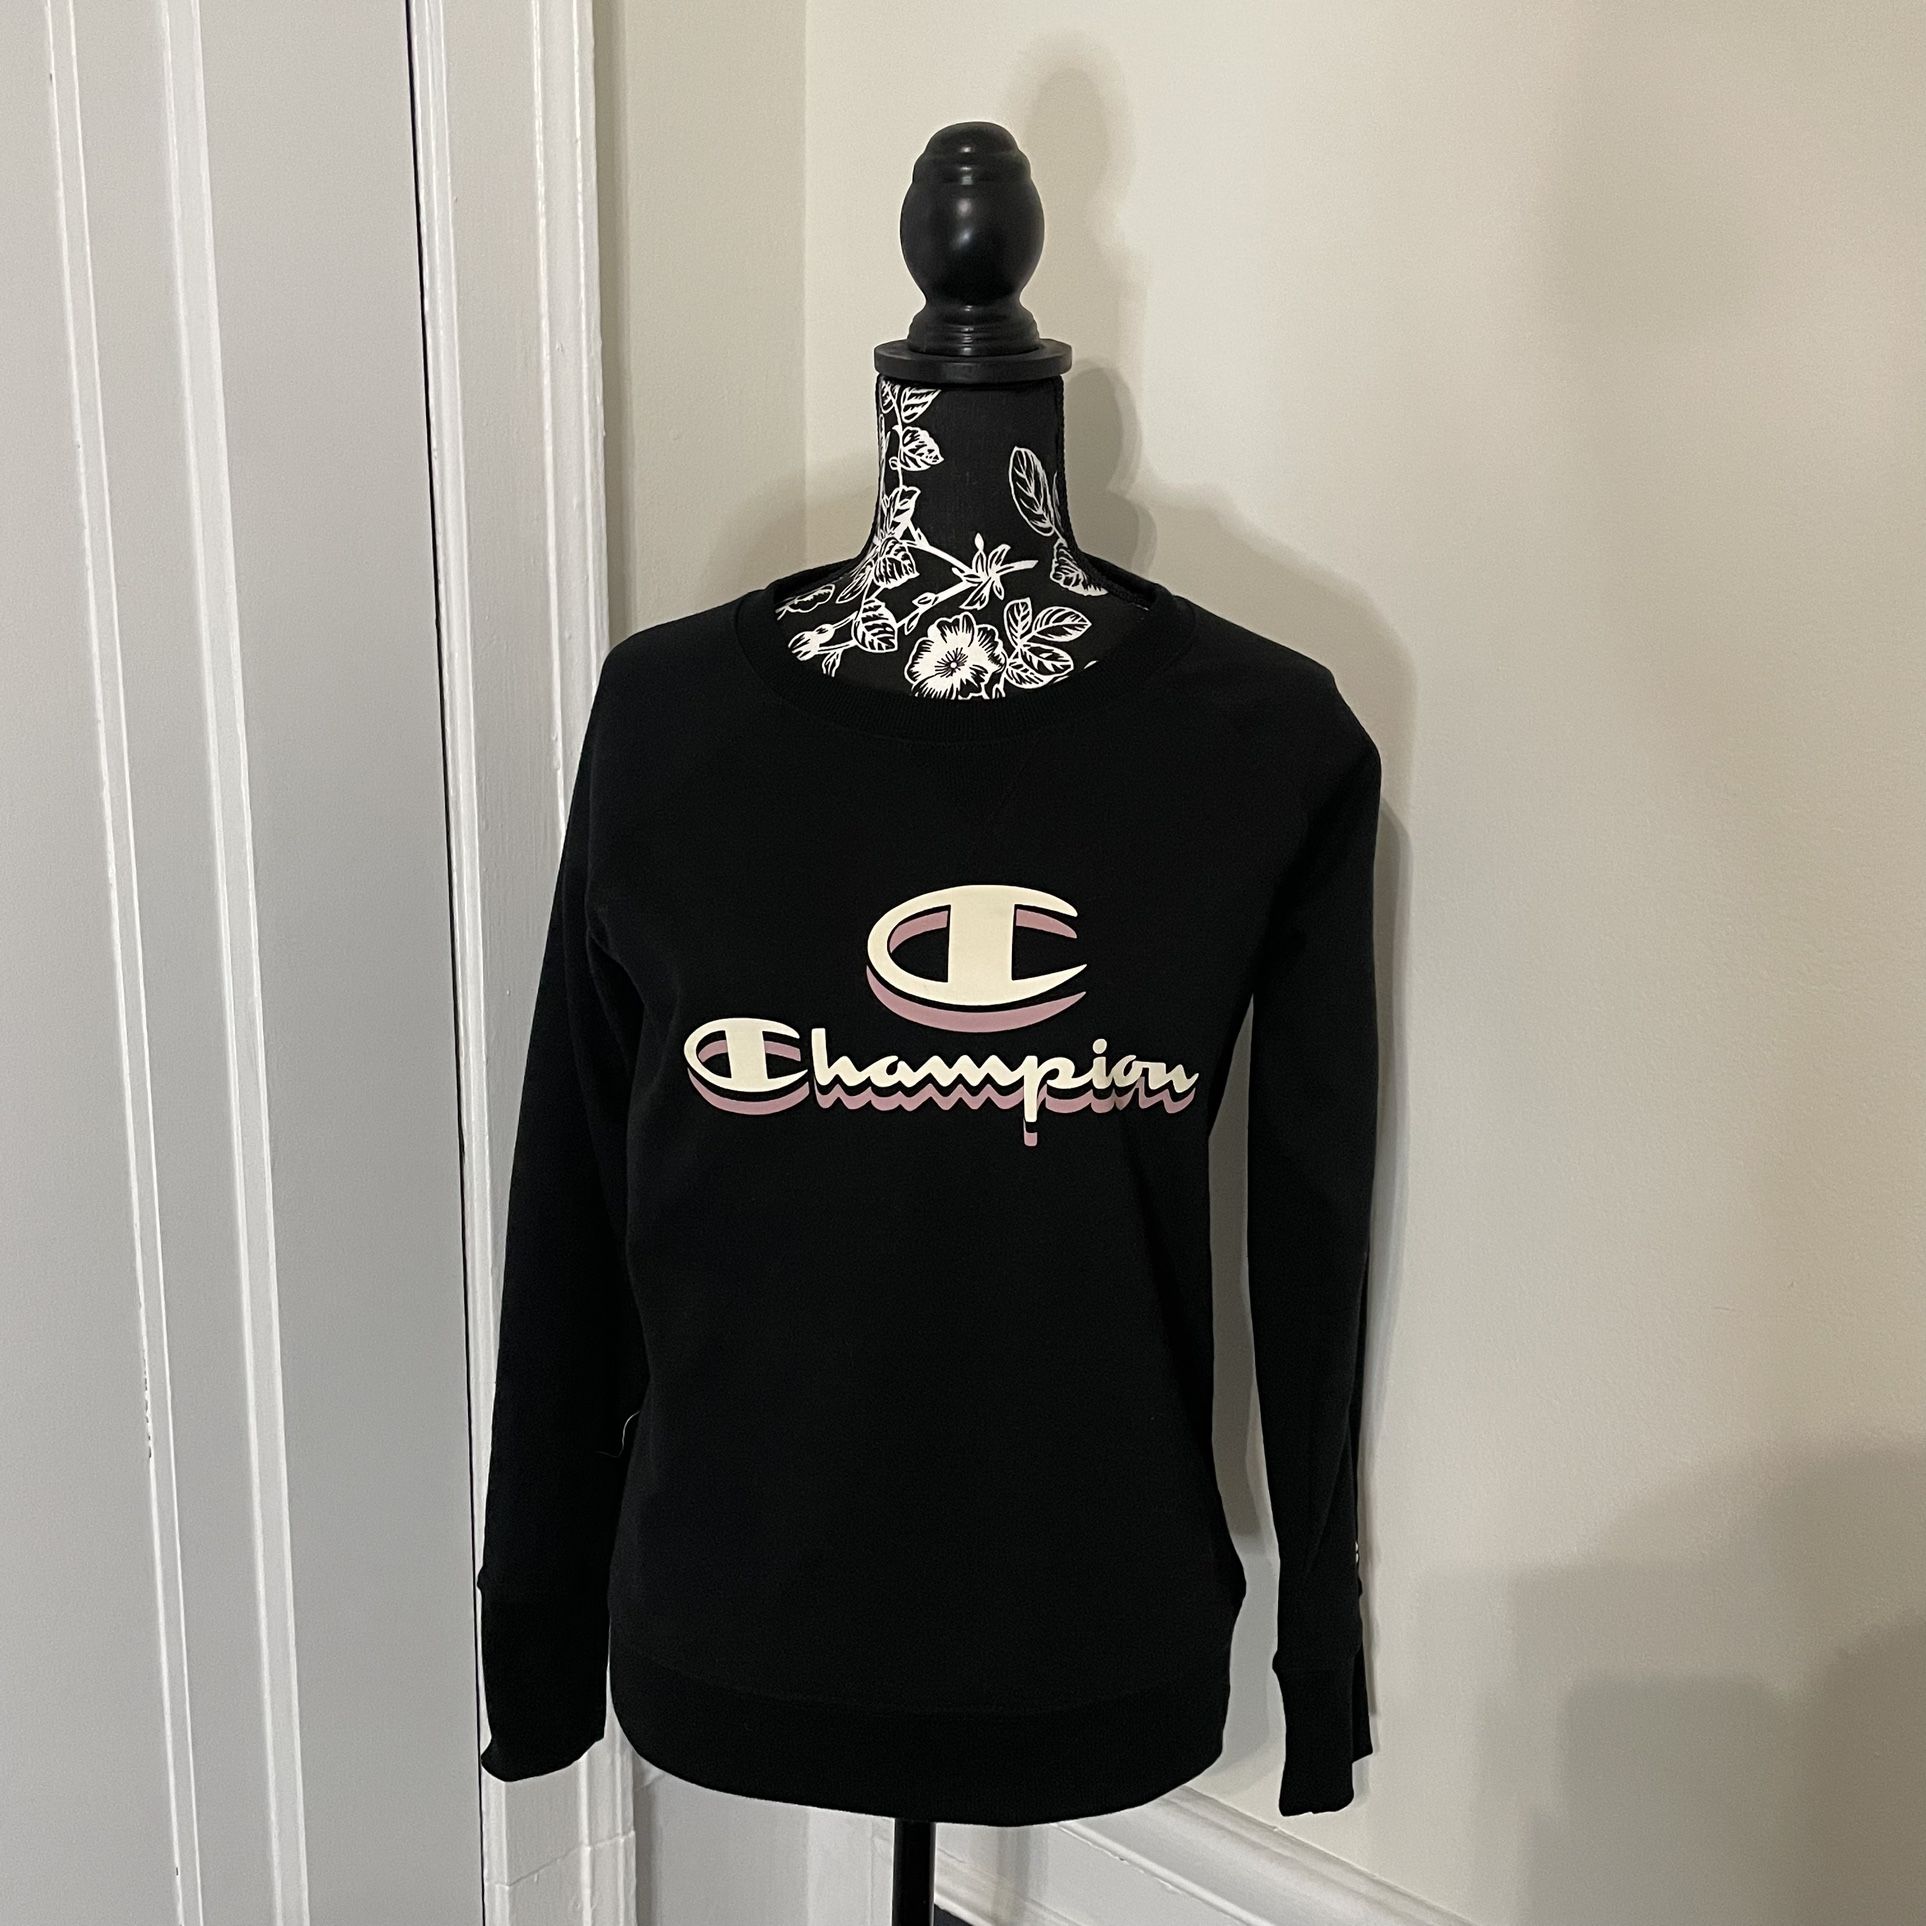 Women's Champion Powerblend Graphic Crewneck Sweatshirt in Black (Size XS)